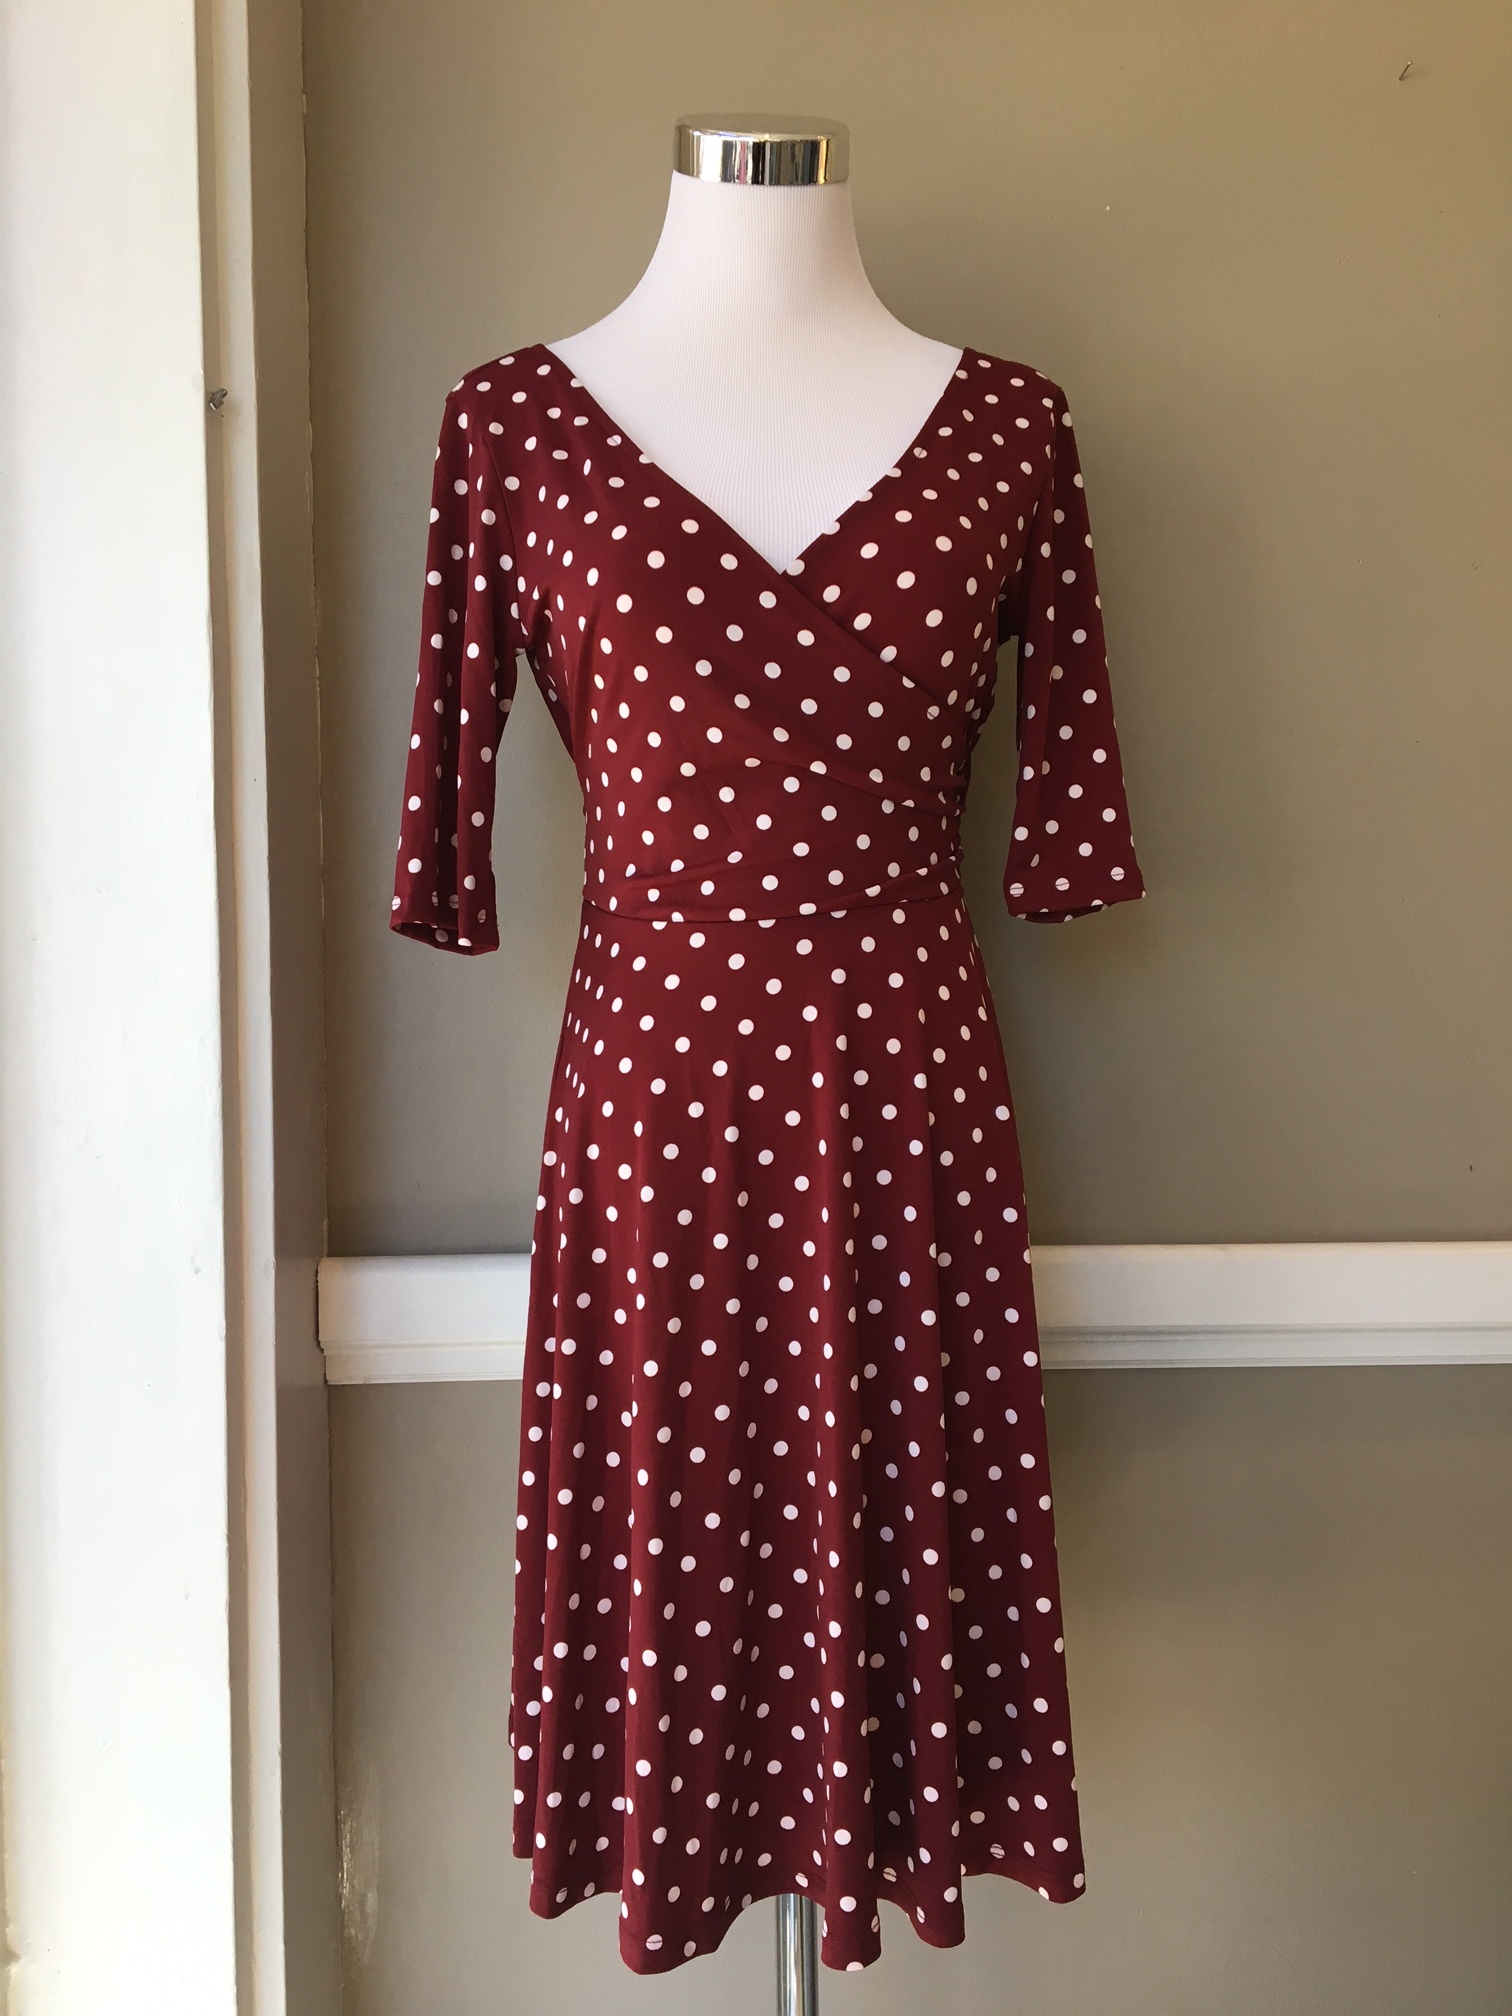 Polka Dot Dress ($42)